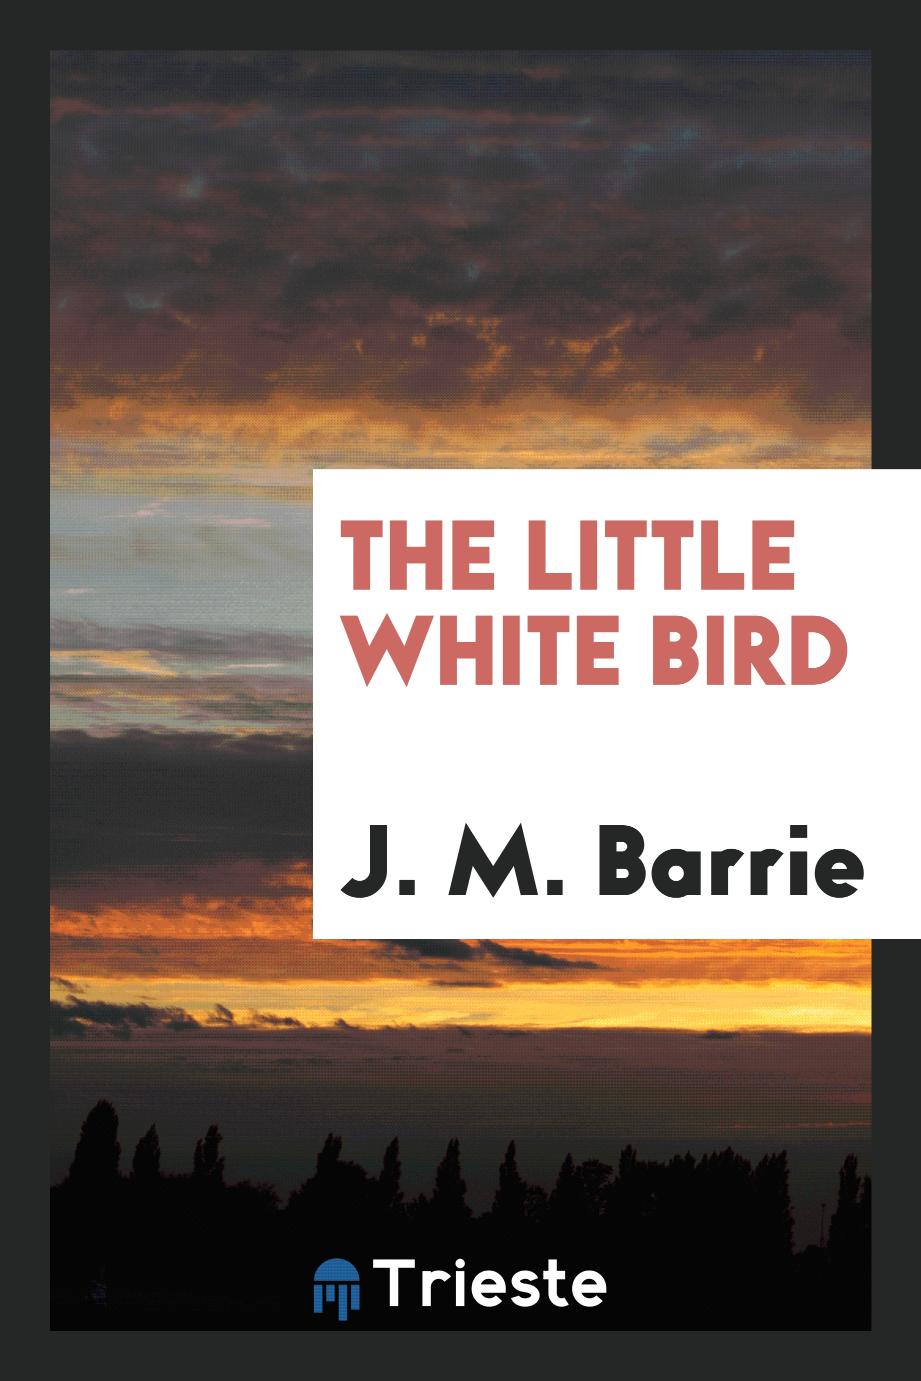 The little white bird